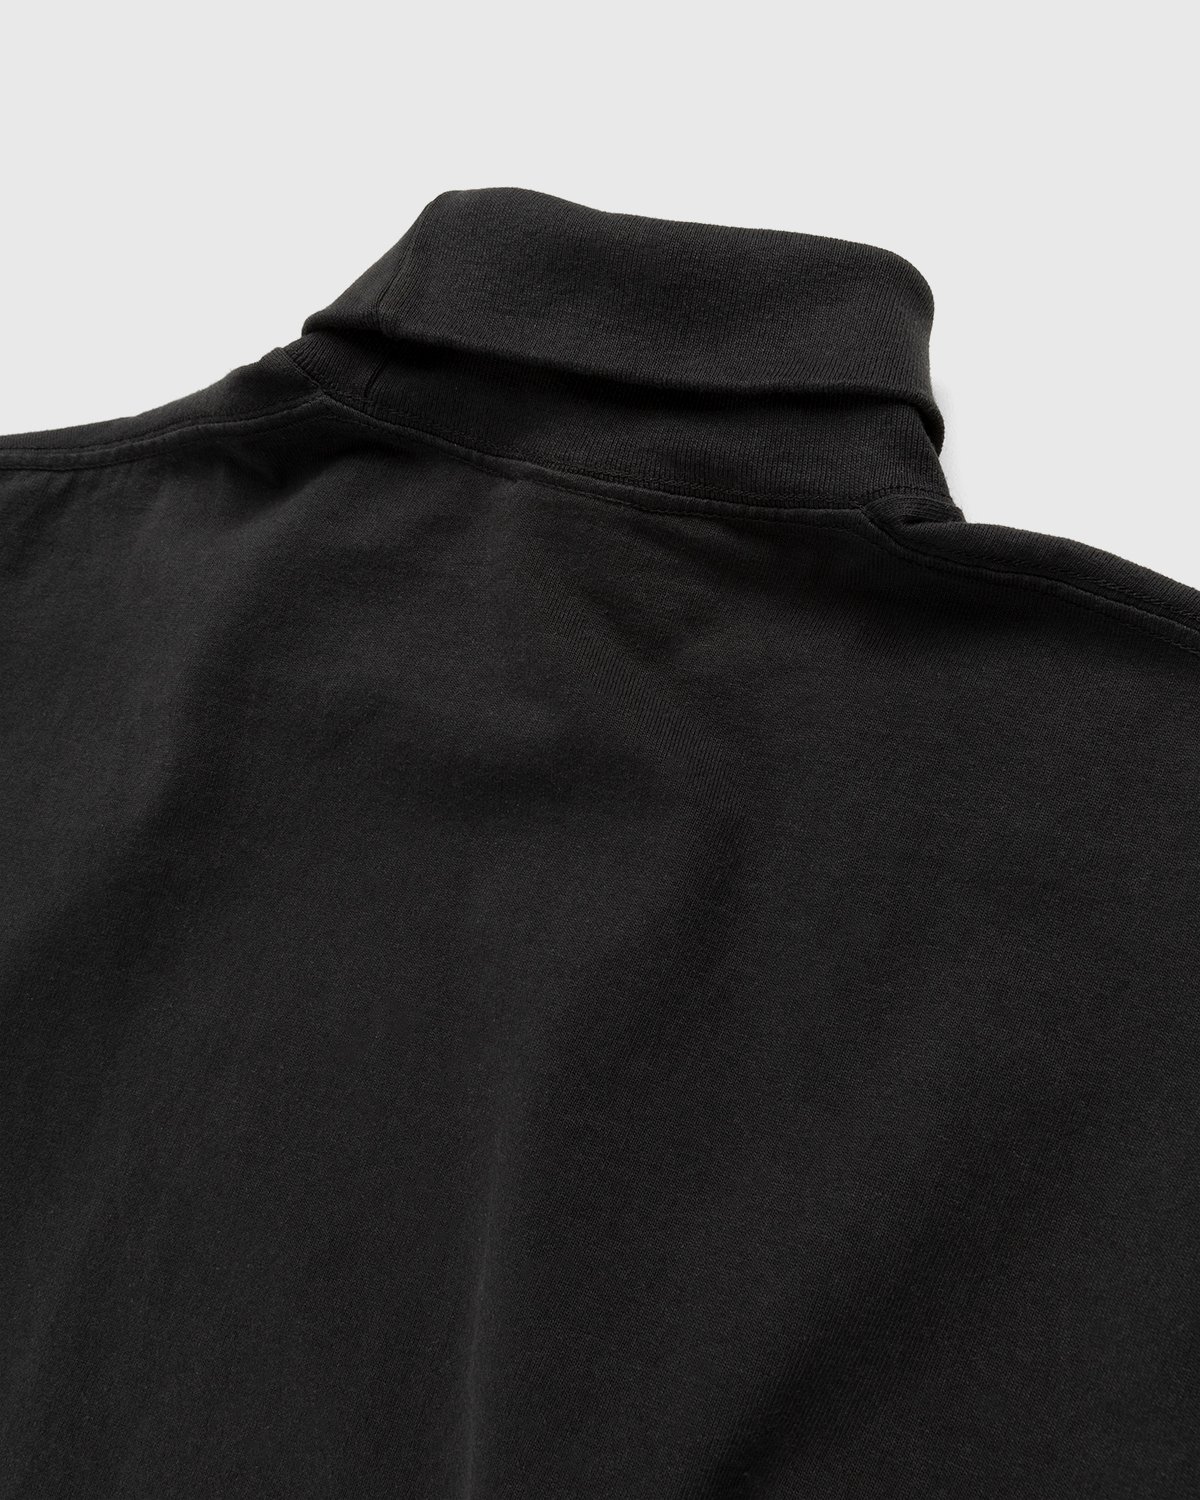 Highsnobiety - Heavy Staples Turtleneck Black - Clothing - Black - Image 5